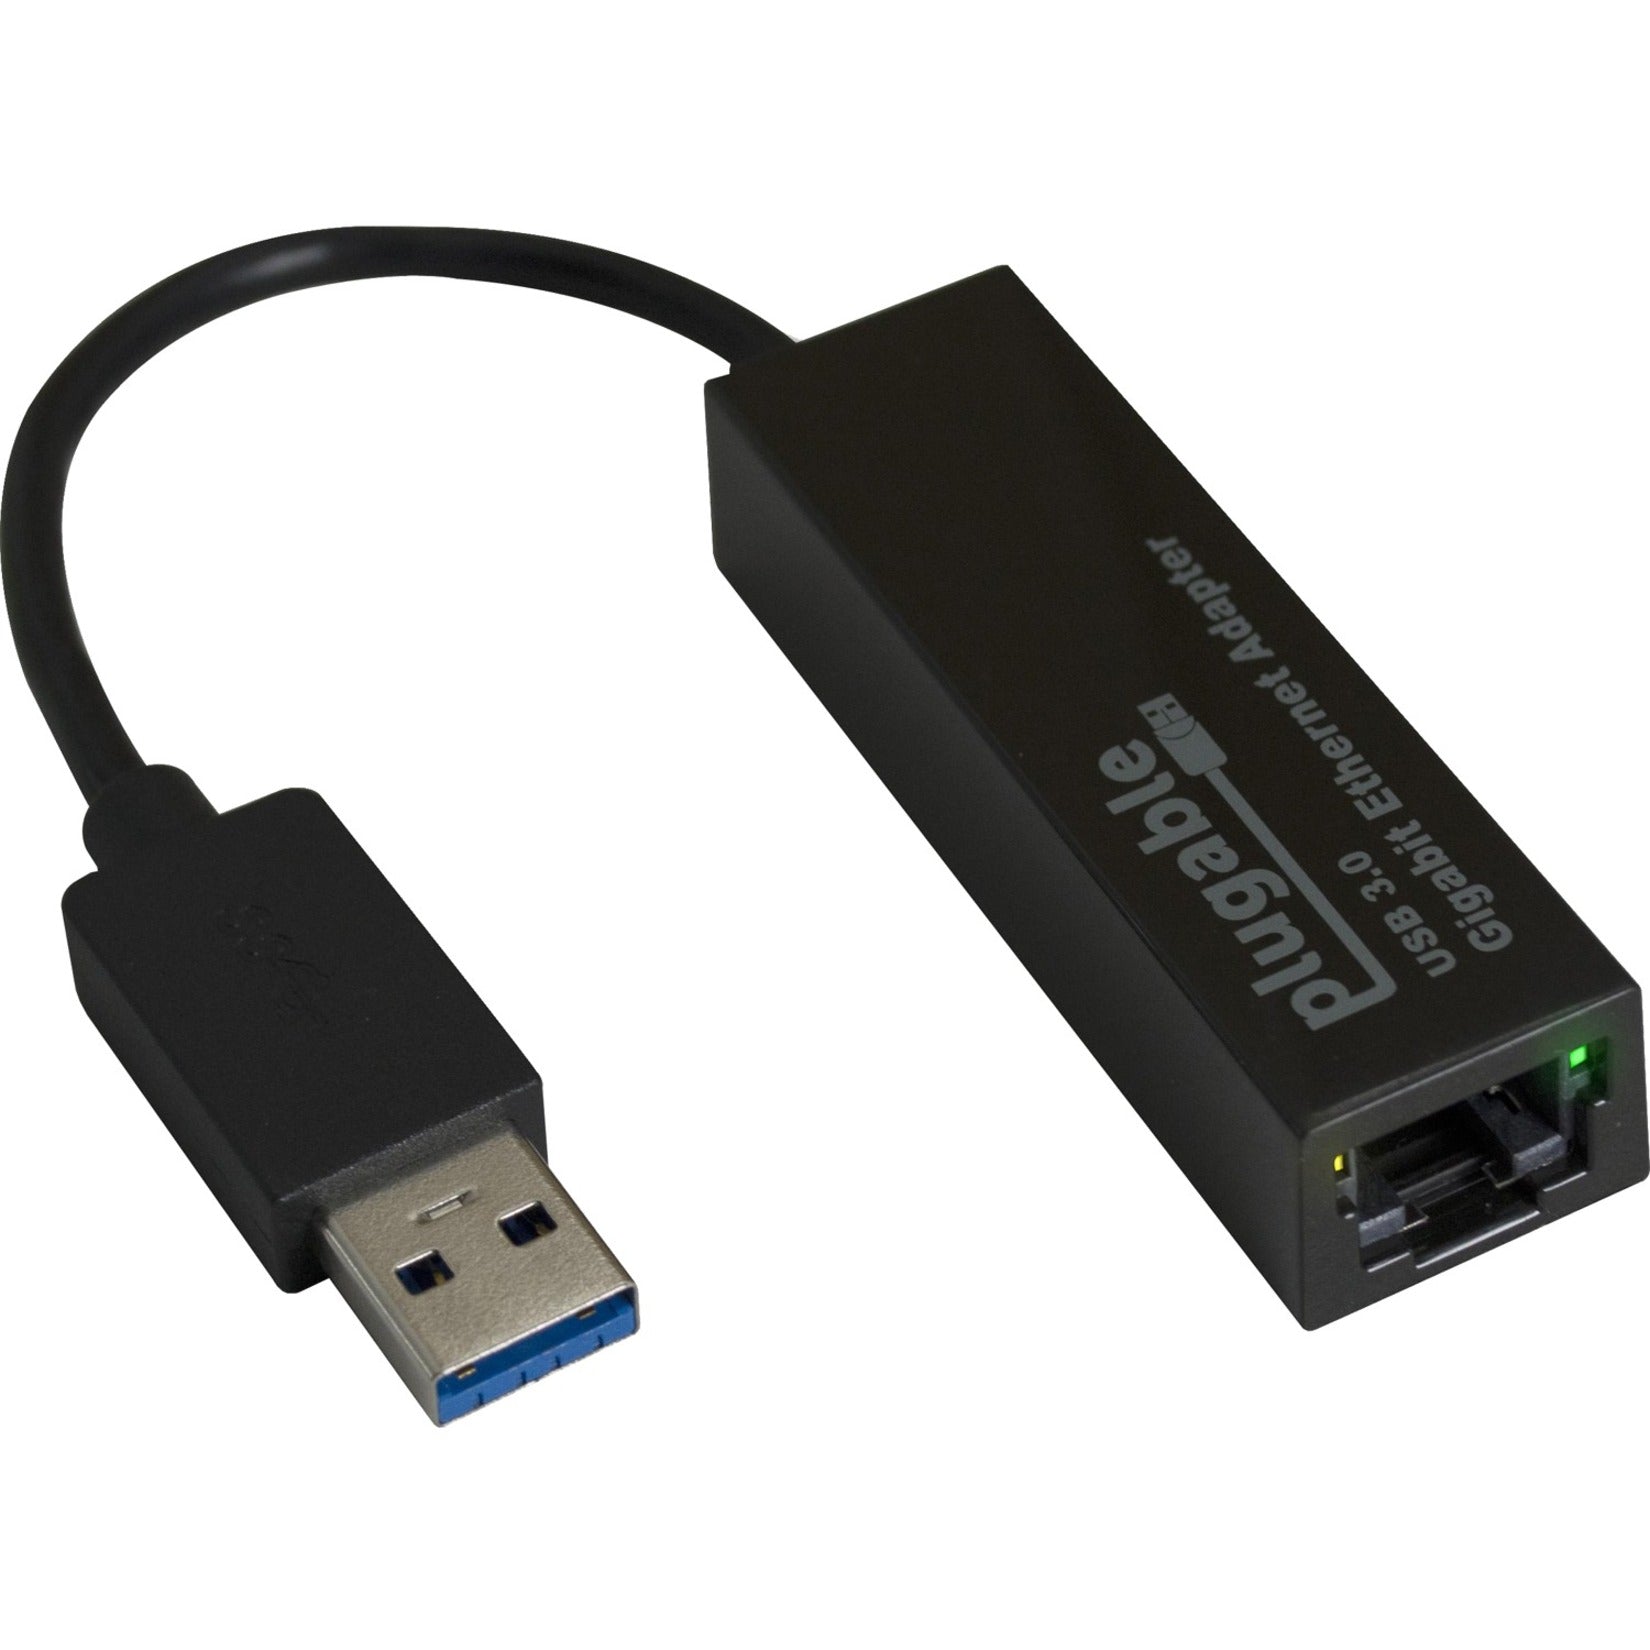 Plugable USB3-E1000 USB to Ethernet Adapter, USB 3.0 to Gigabit Ethernet, High-Speed Data Transfer